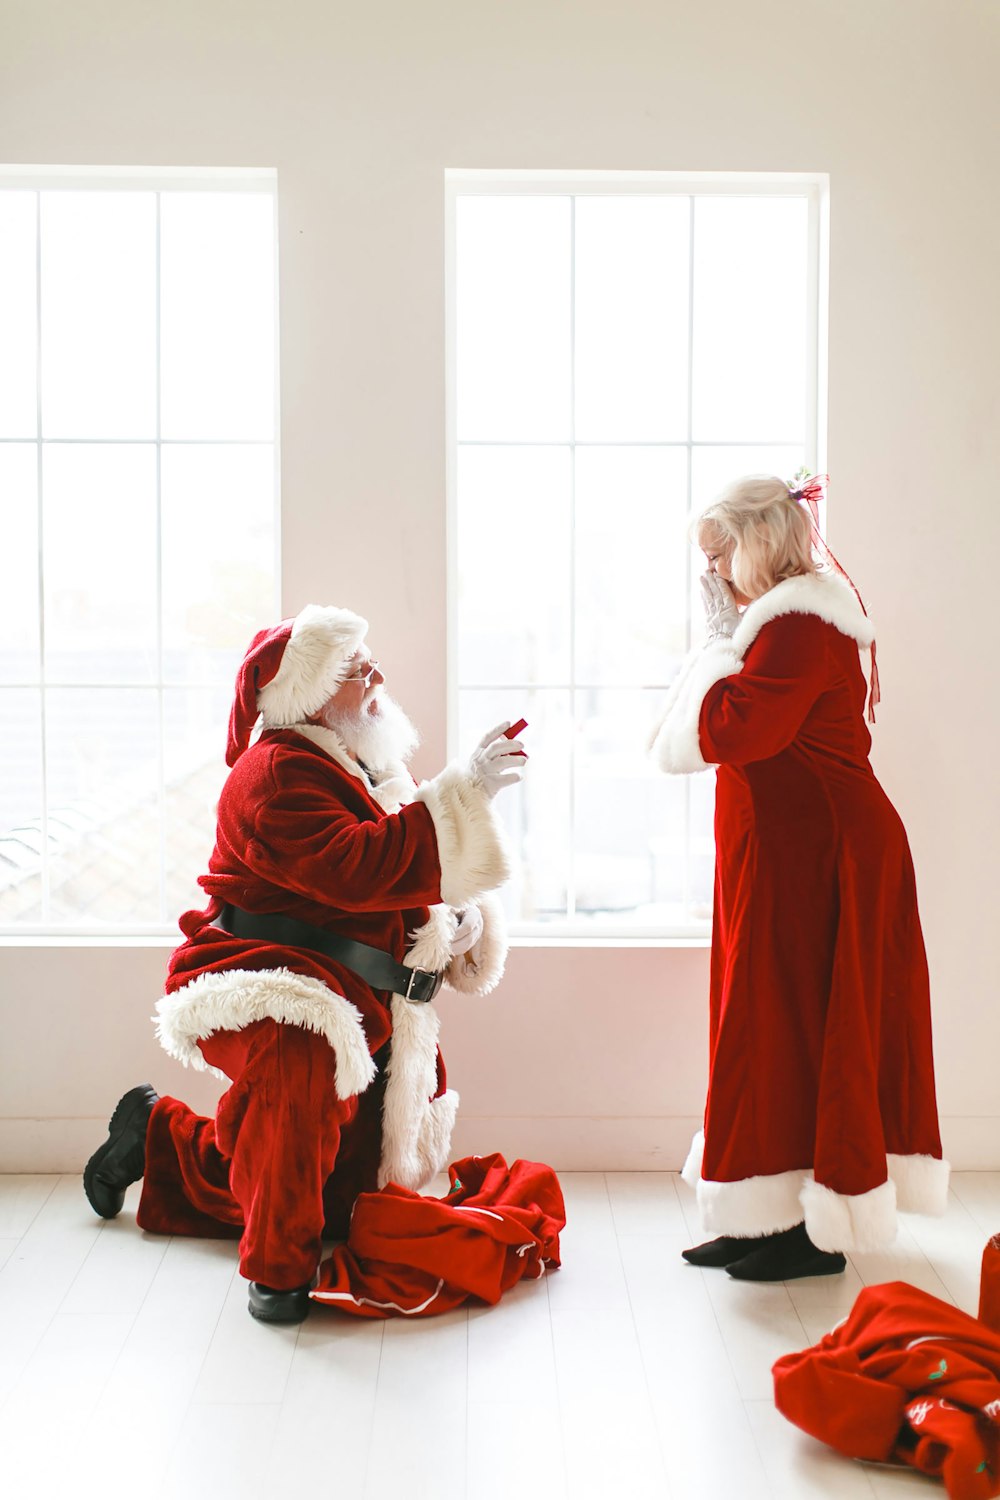 a man dressed as santa claus and a woman dressed as santa claus